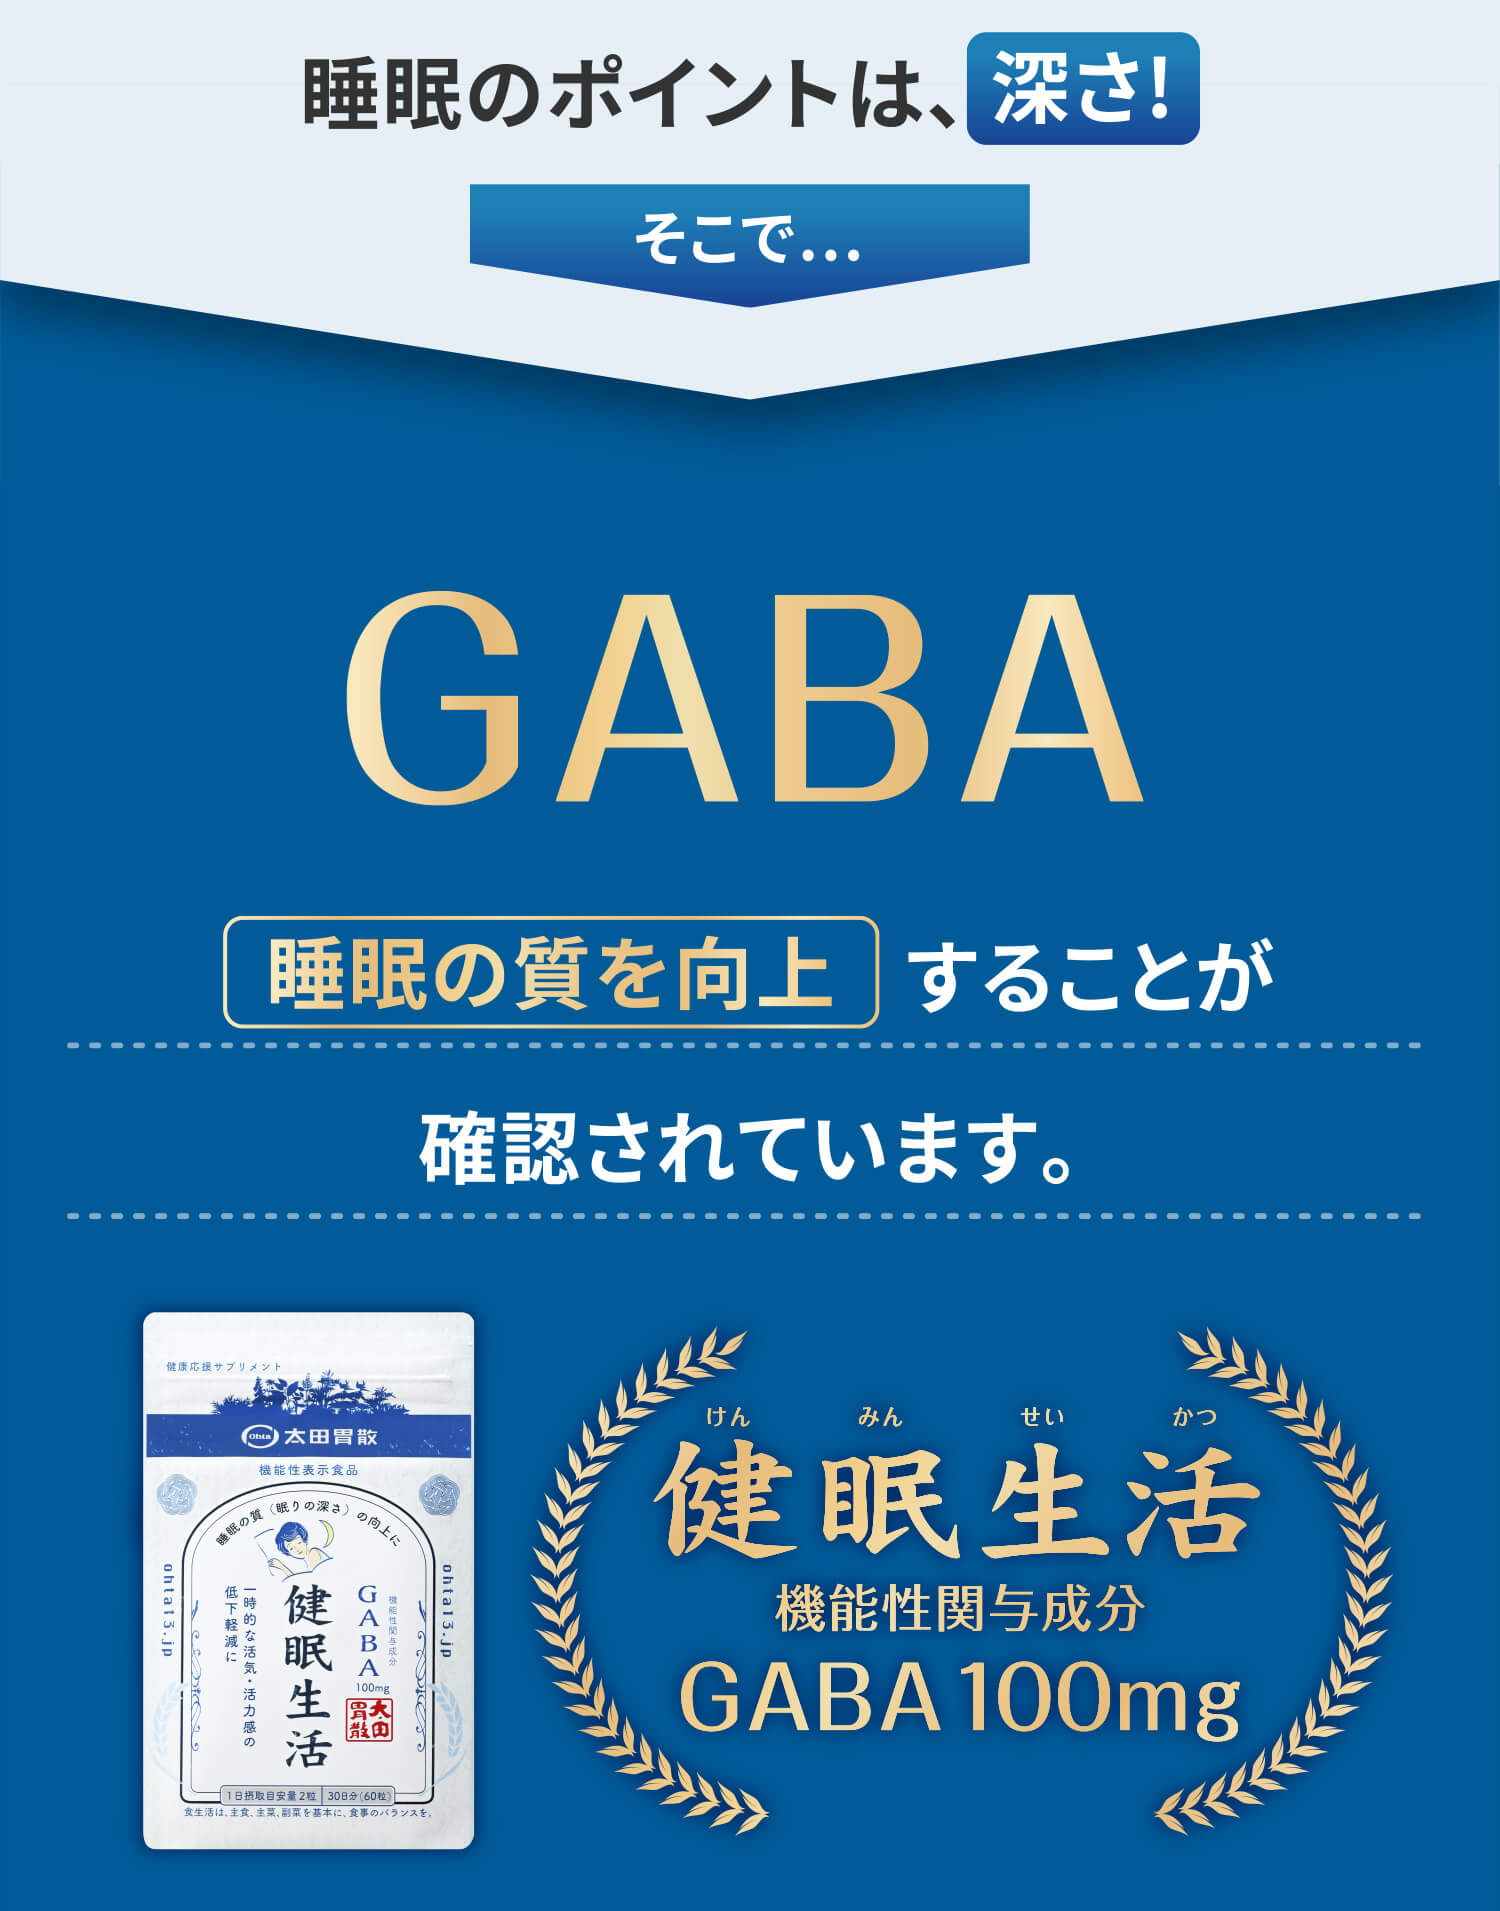 GABA「睡眠の質を向上」することが確認されています。健眠生活(けんみんせいかつ) 機能性関与成分GABA100mg